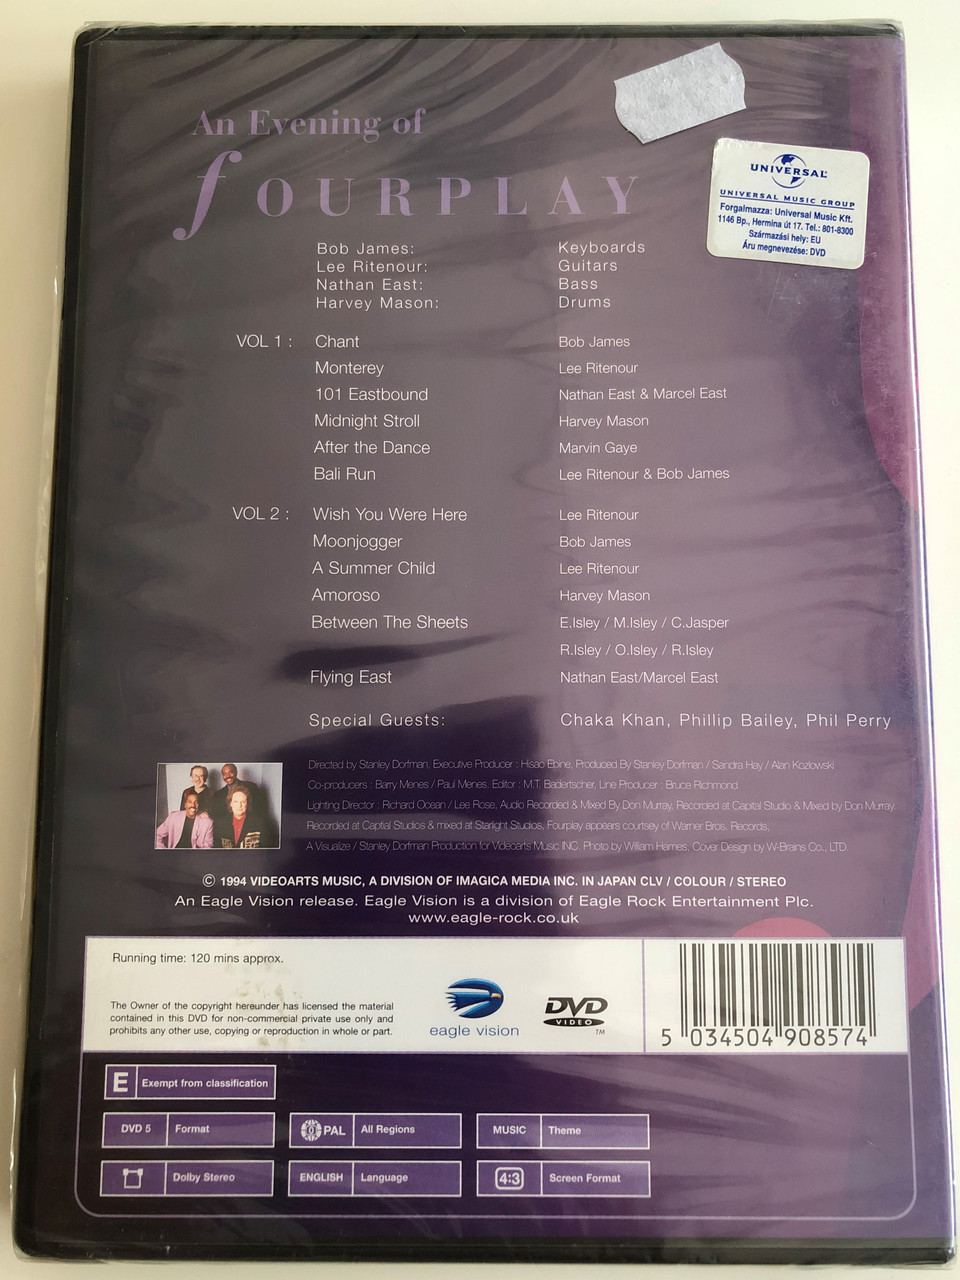 An evening of Fourplay DVD 1994 Volumes I and II / Bob James, Lee Ritenour,  Nathan East, Harvey Mason / Special Guests: Chaka Khan, Phillip Bailey -  bibleinmylanguage